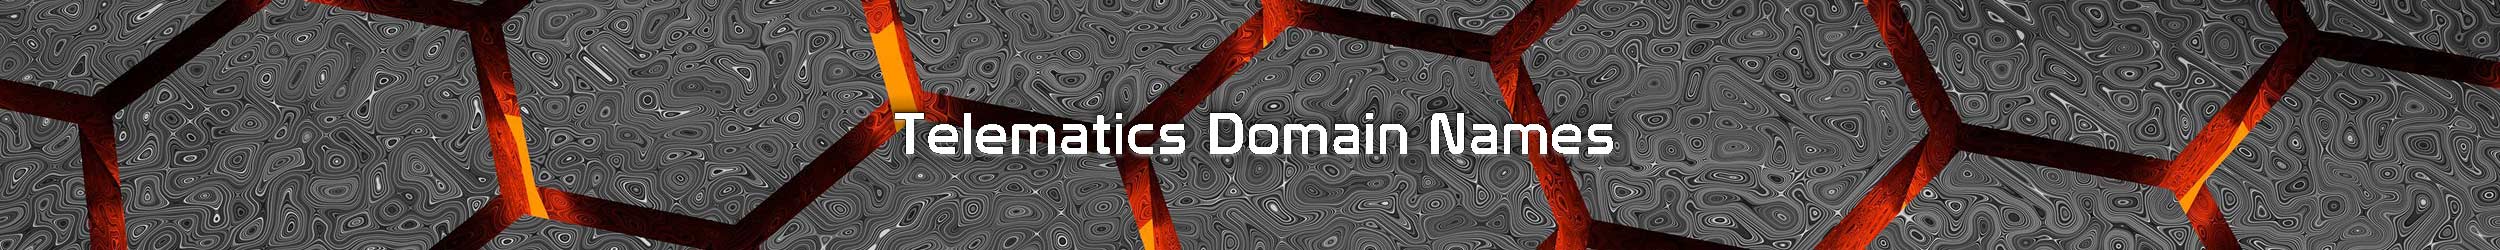 telematics domain names